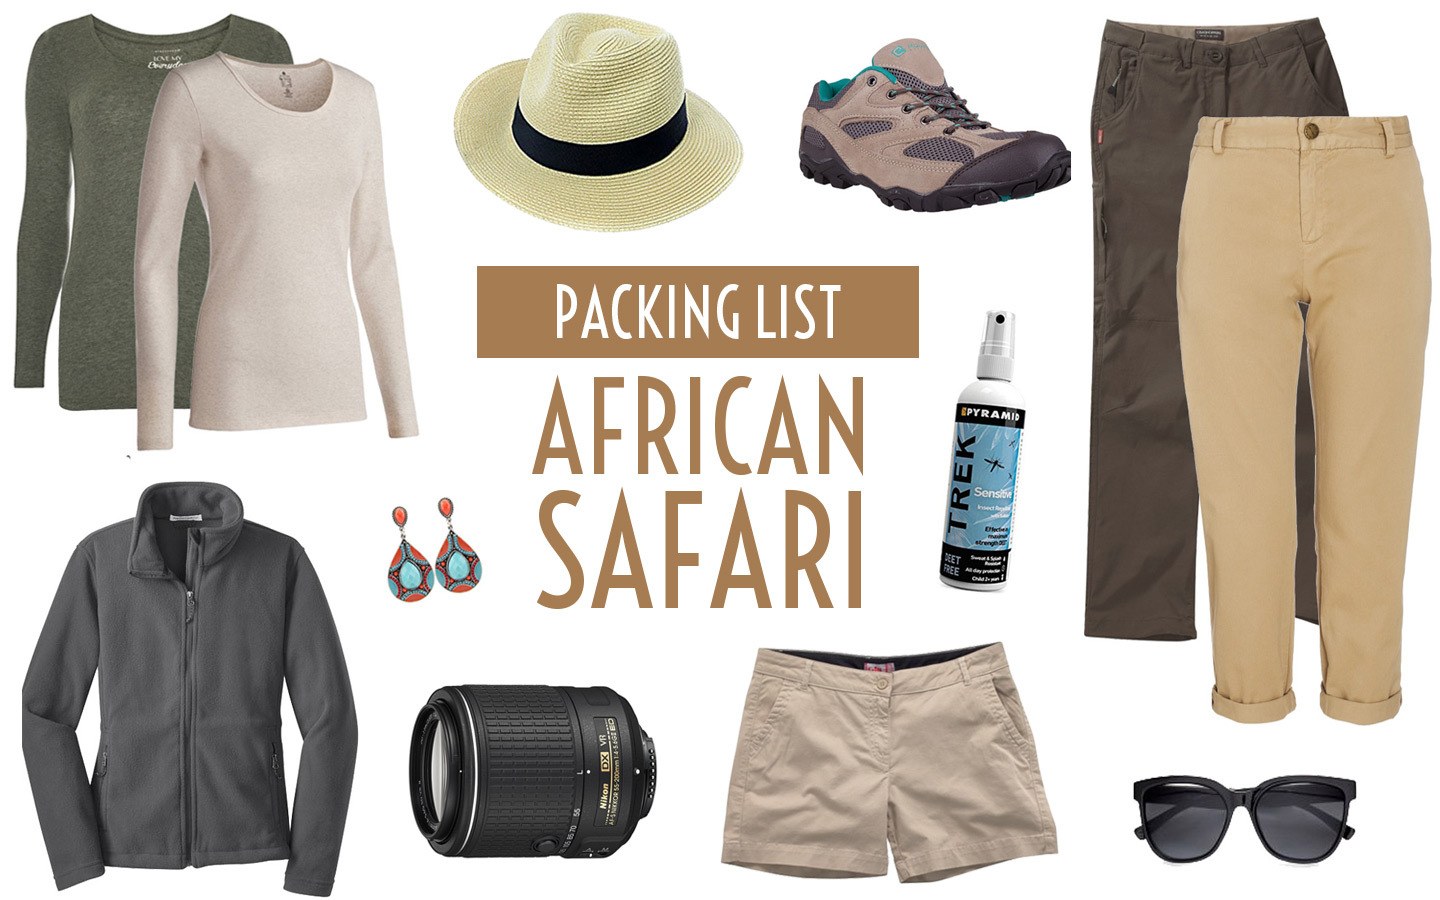 What Should You Pack For a Kenya Safari